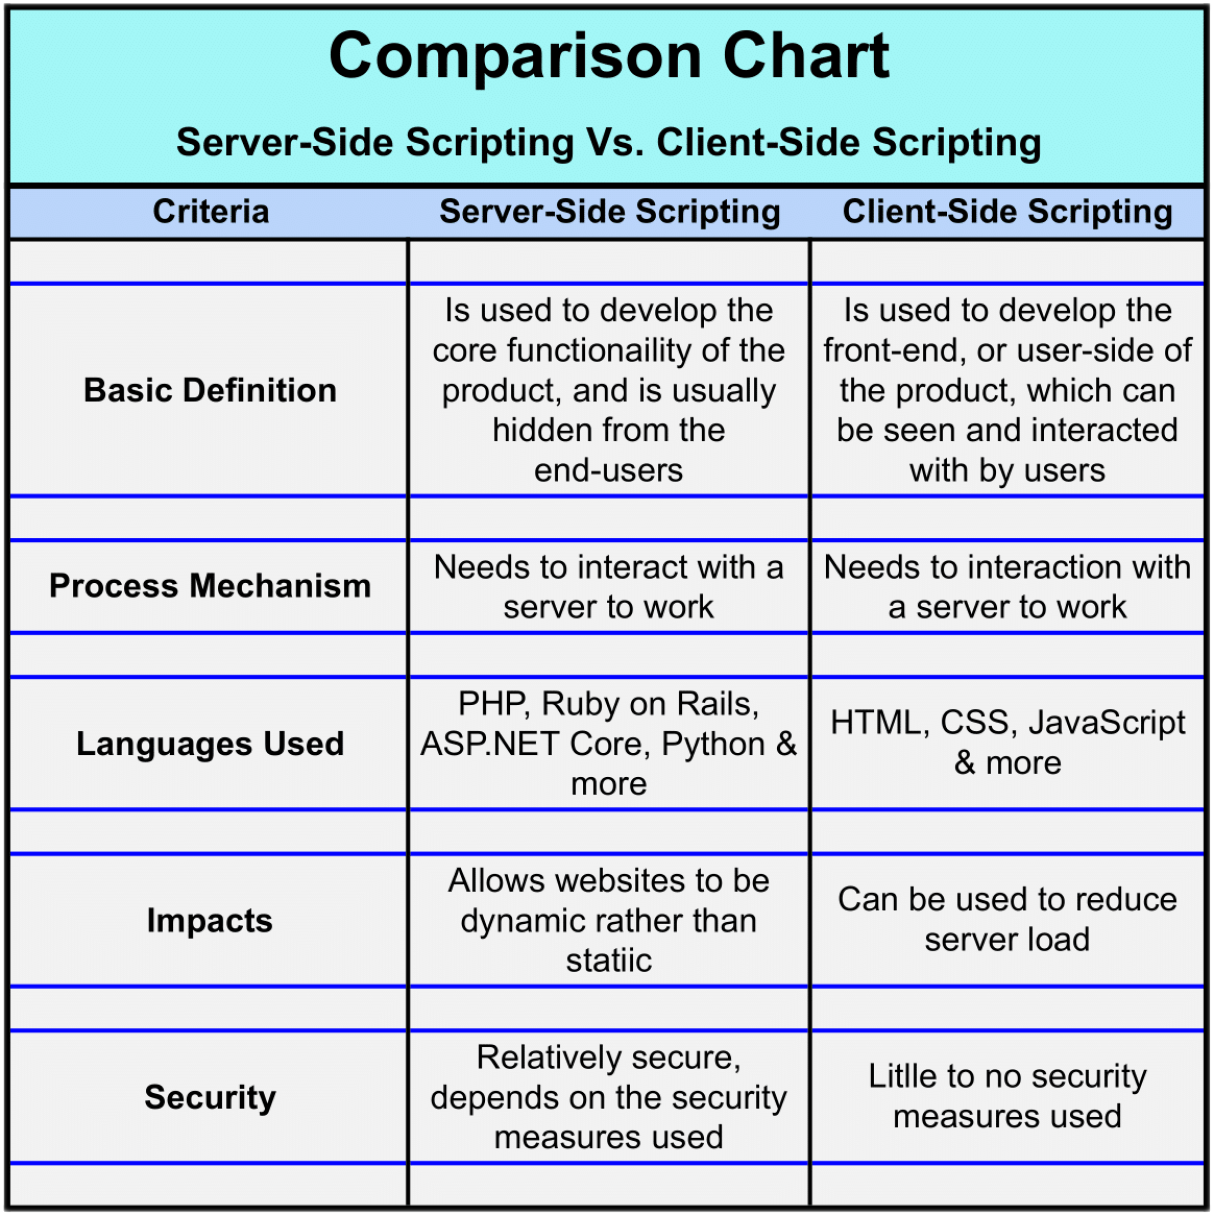 Comparison between server-side and client-side scripting